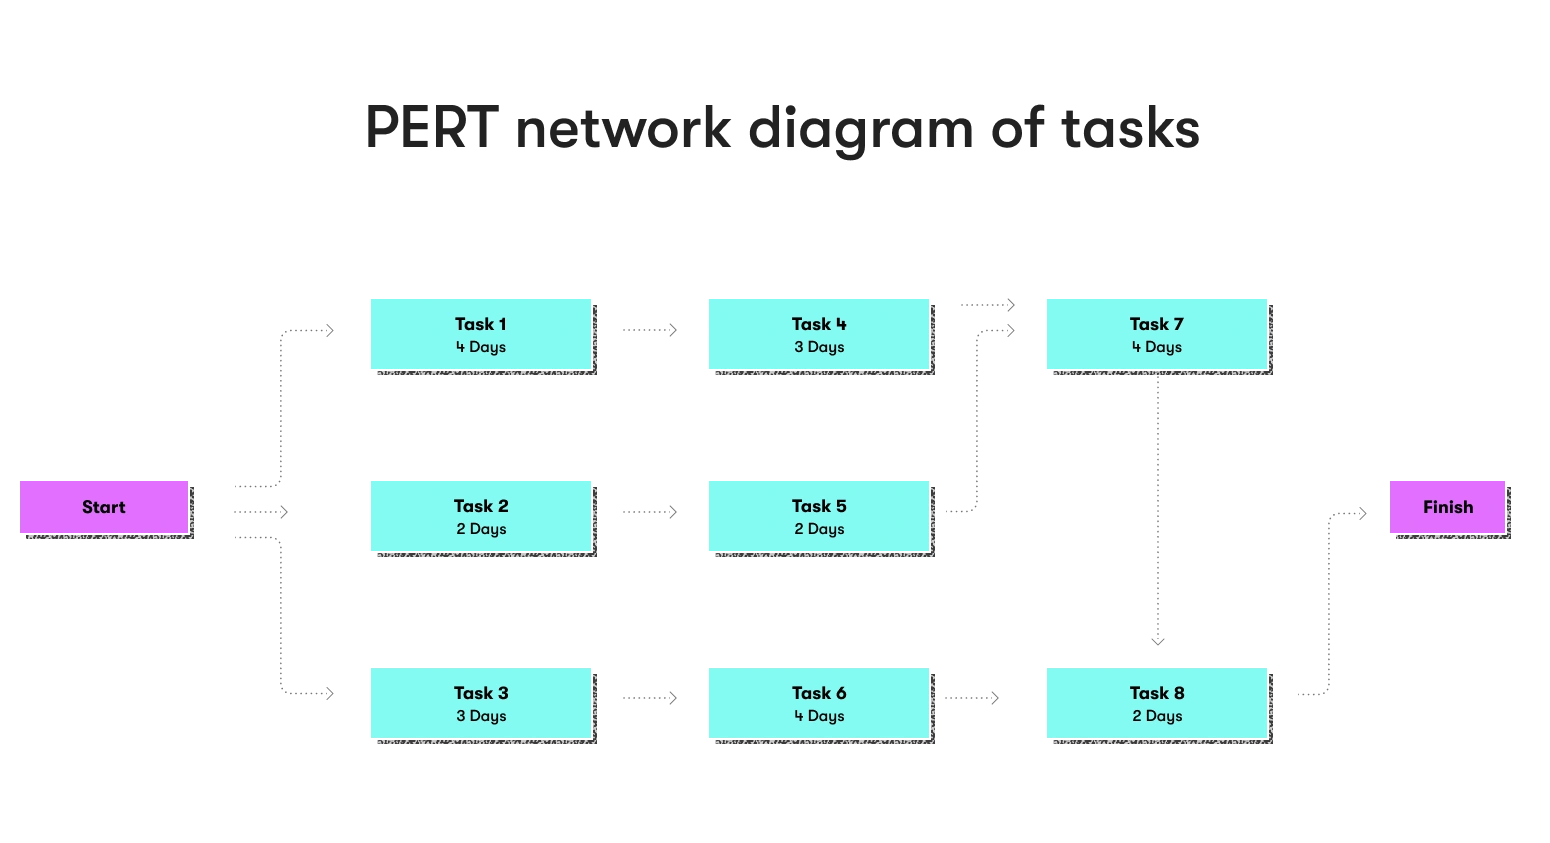 PERT network diagram of tasks in software development time estimation